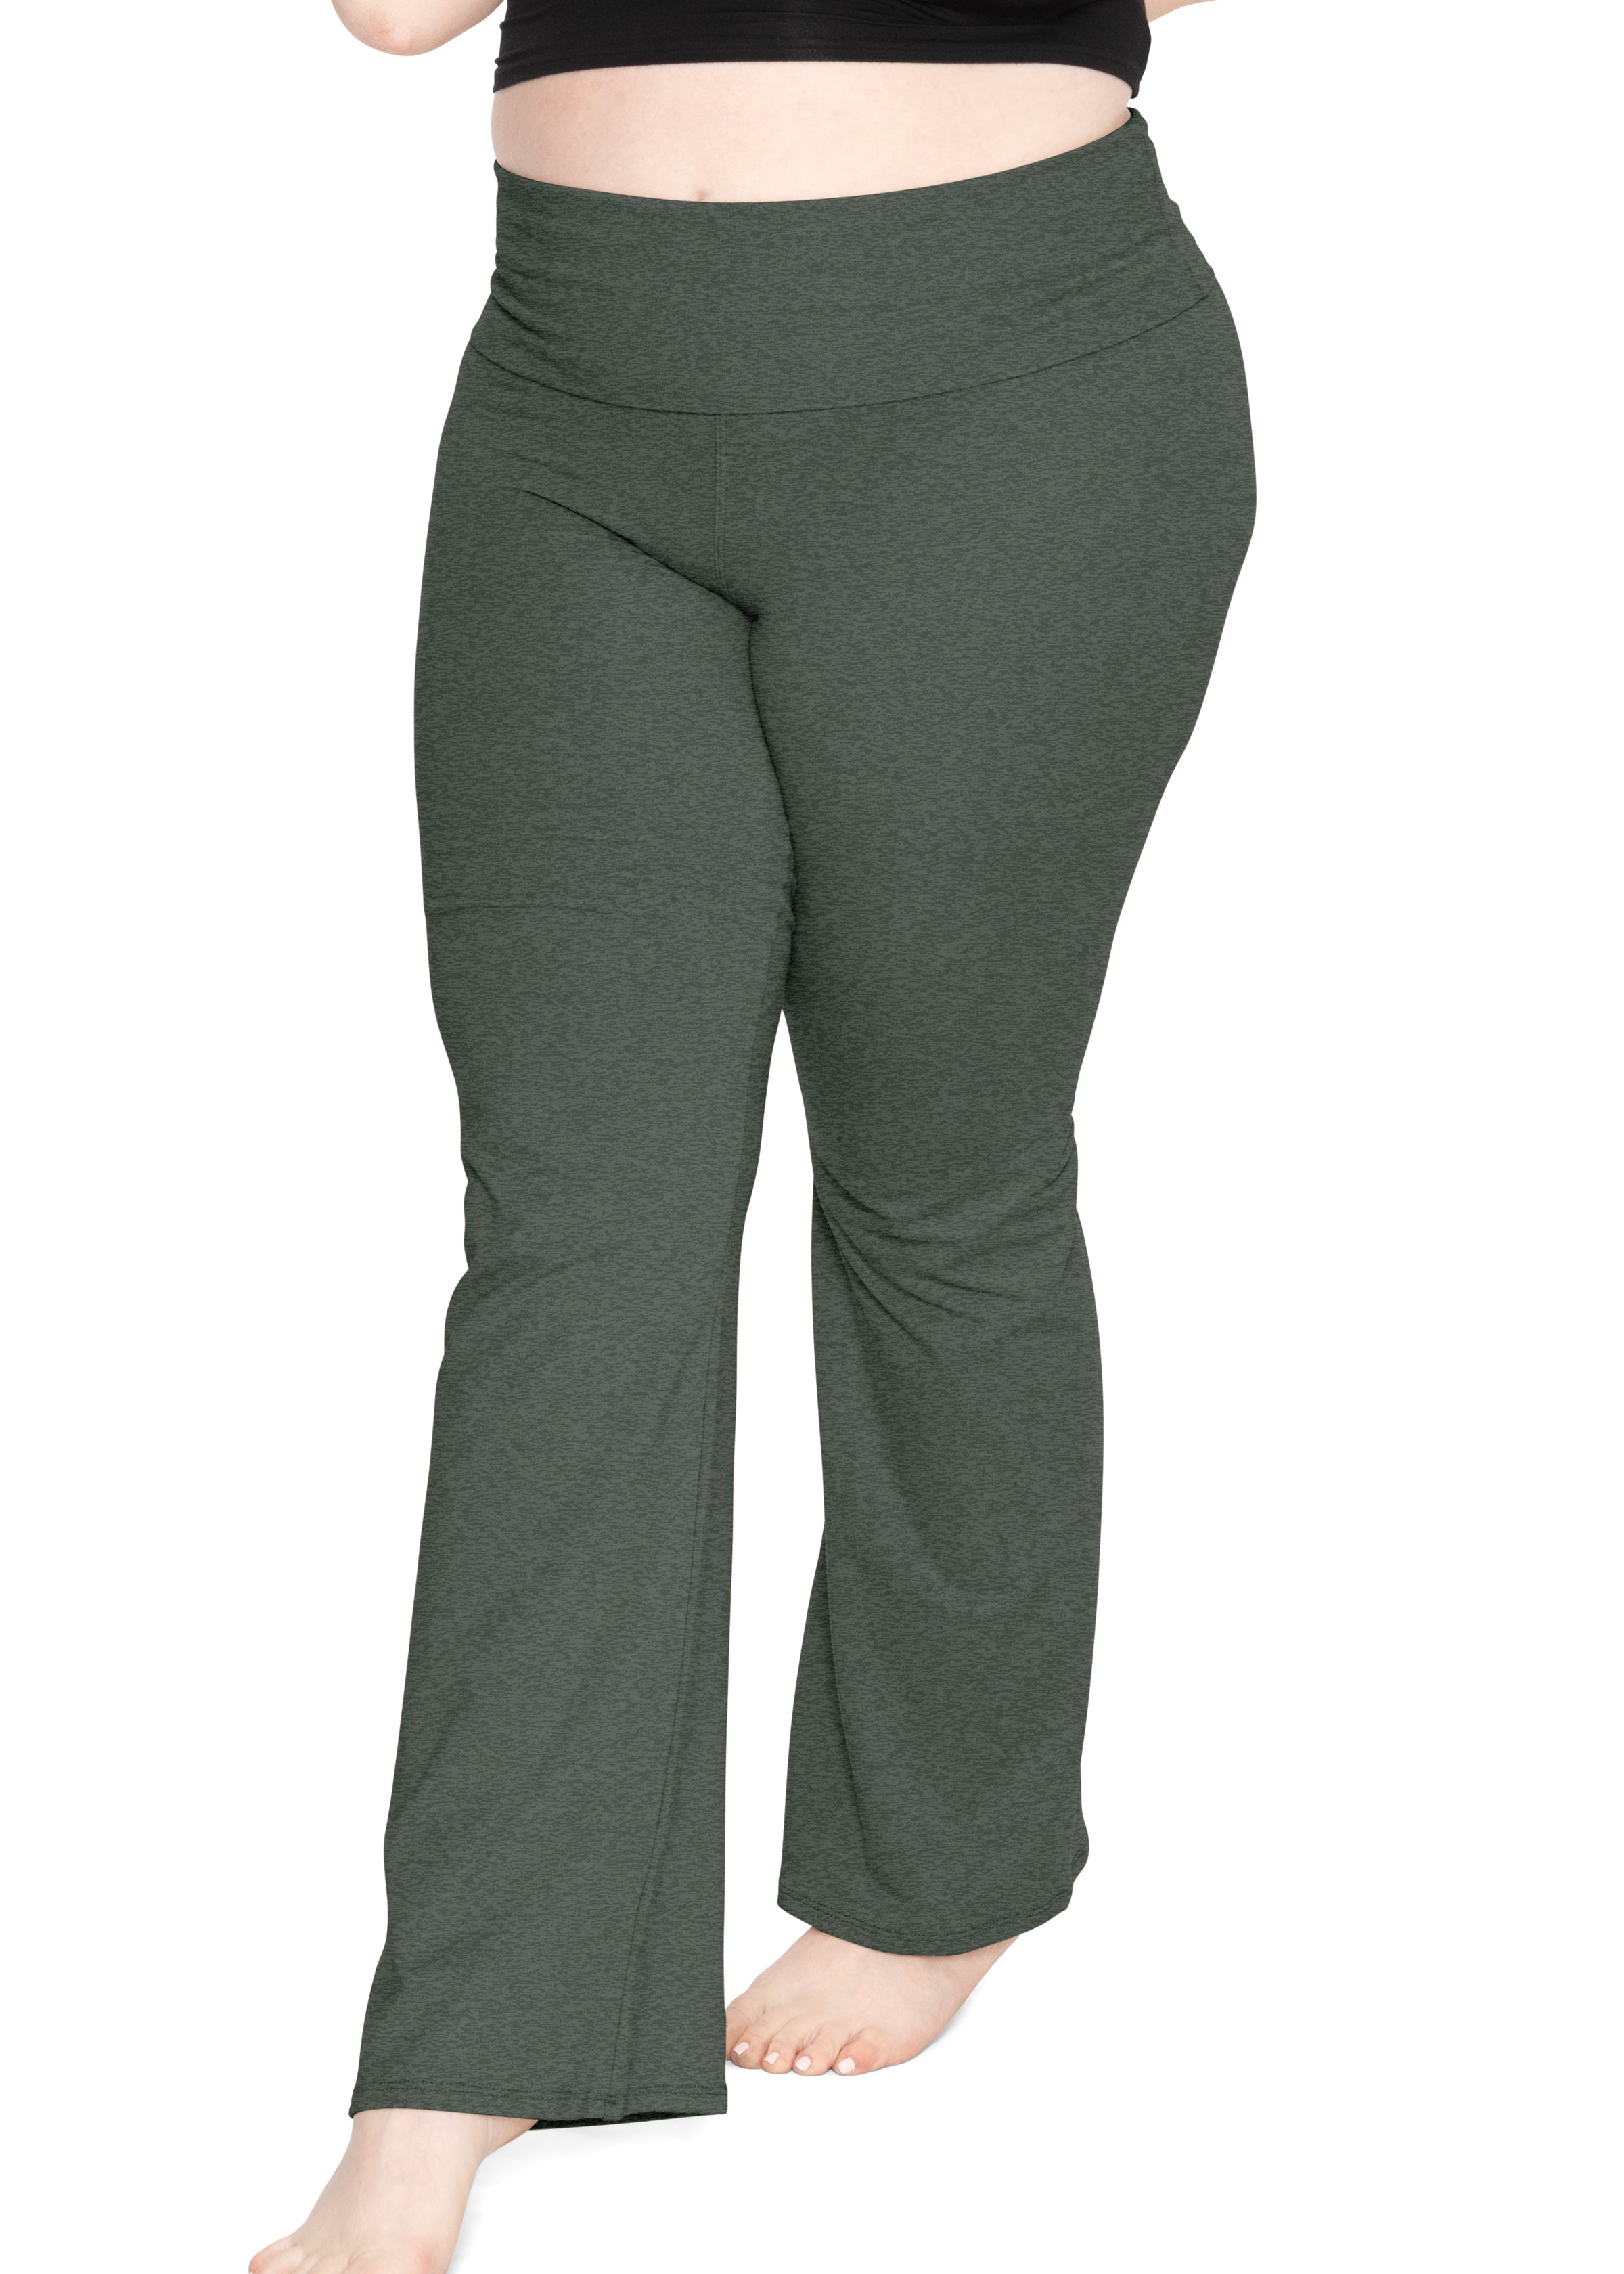 3X Yoga Pants for Women Plus Size Cotton Pants for Women Workout